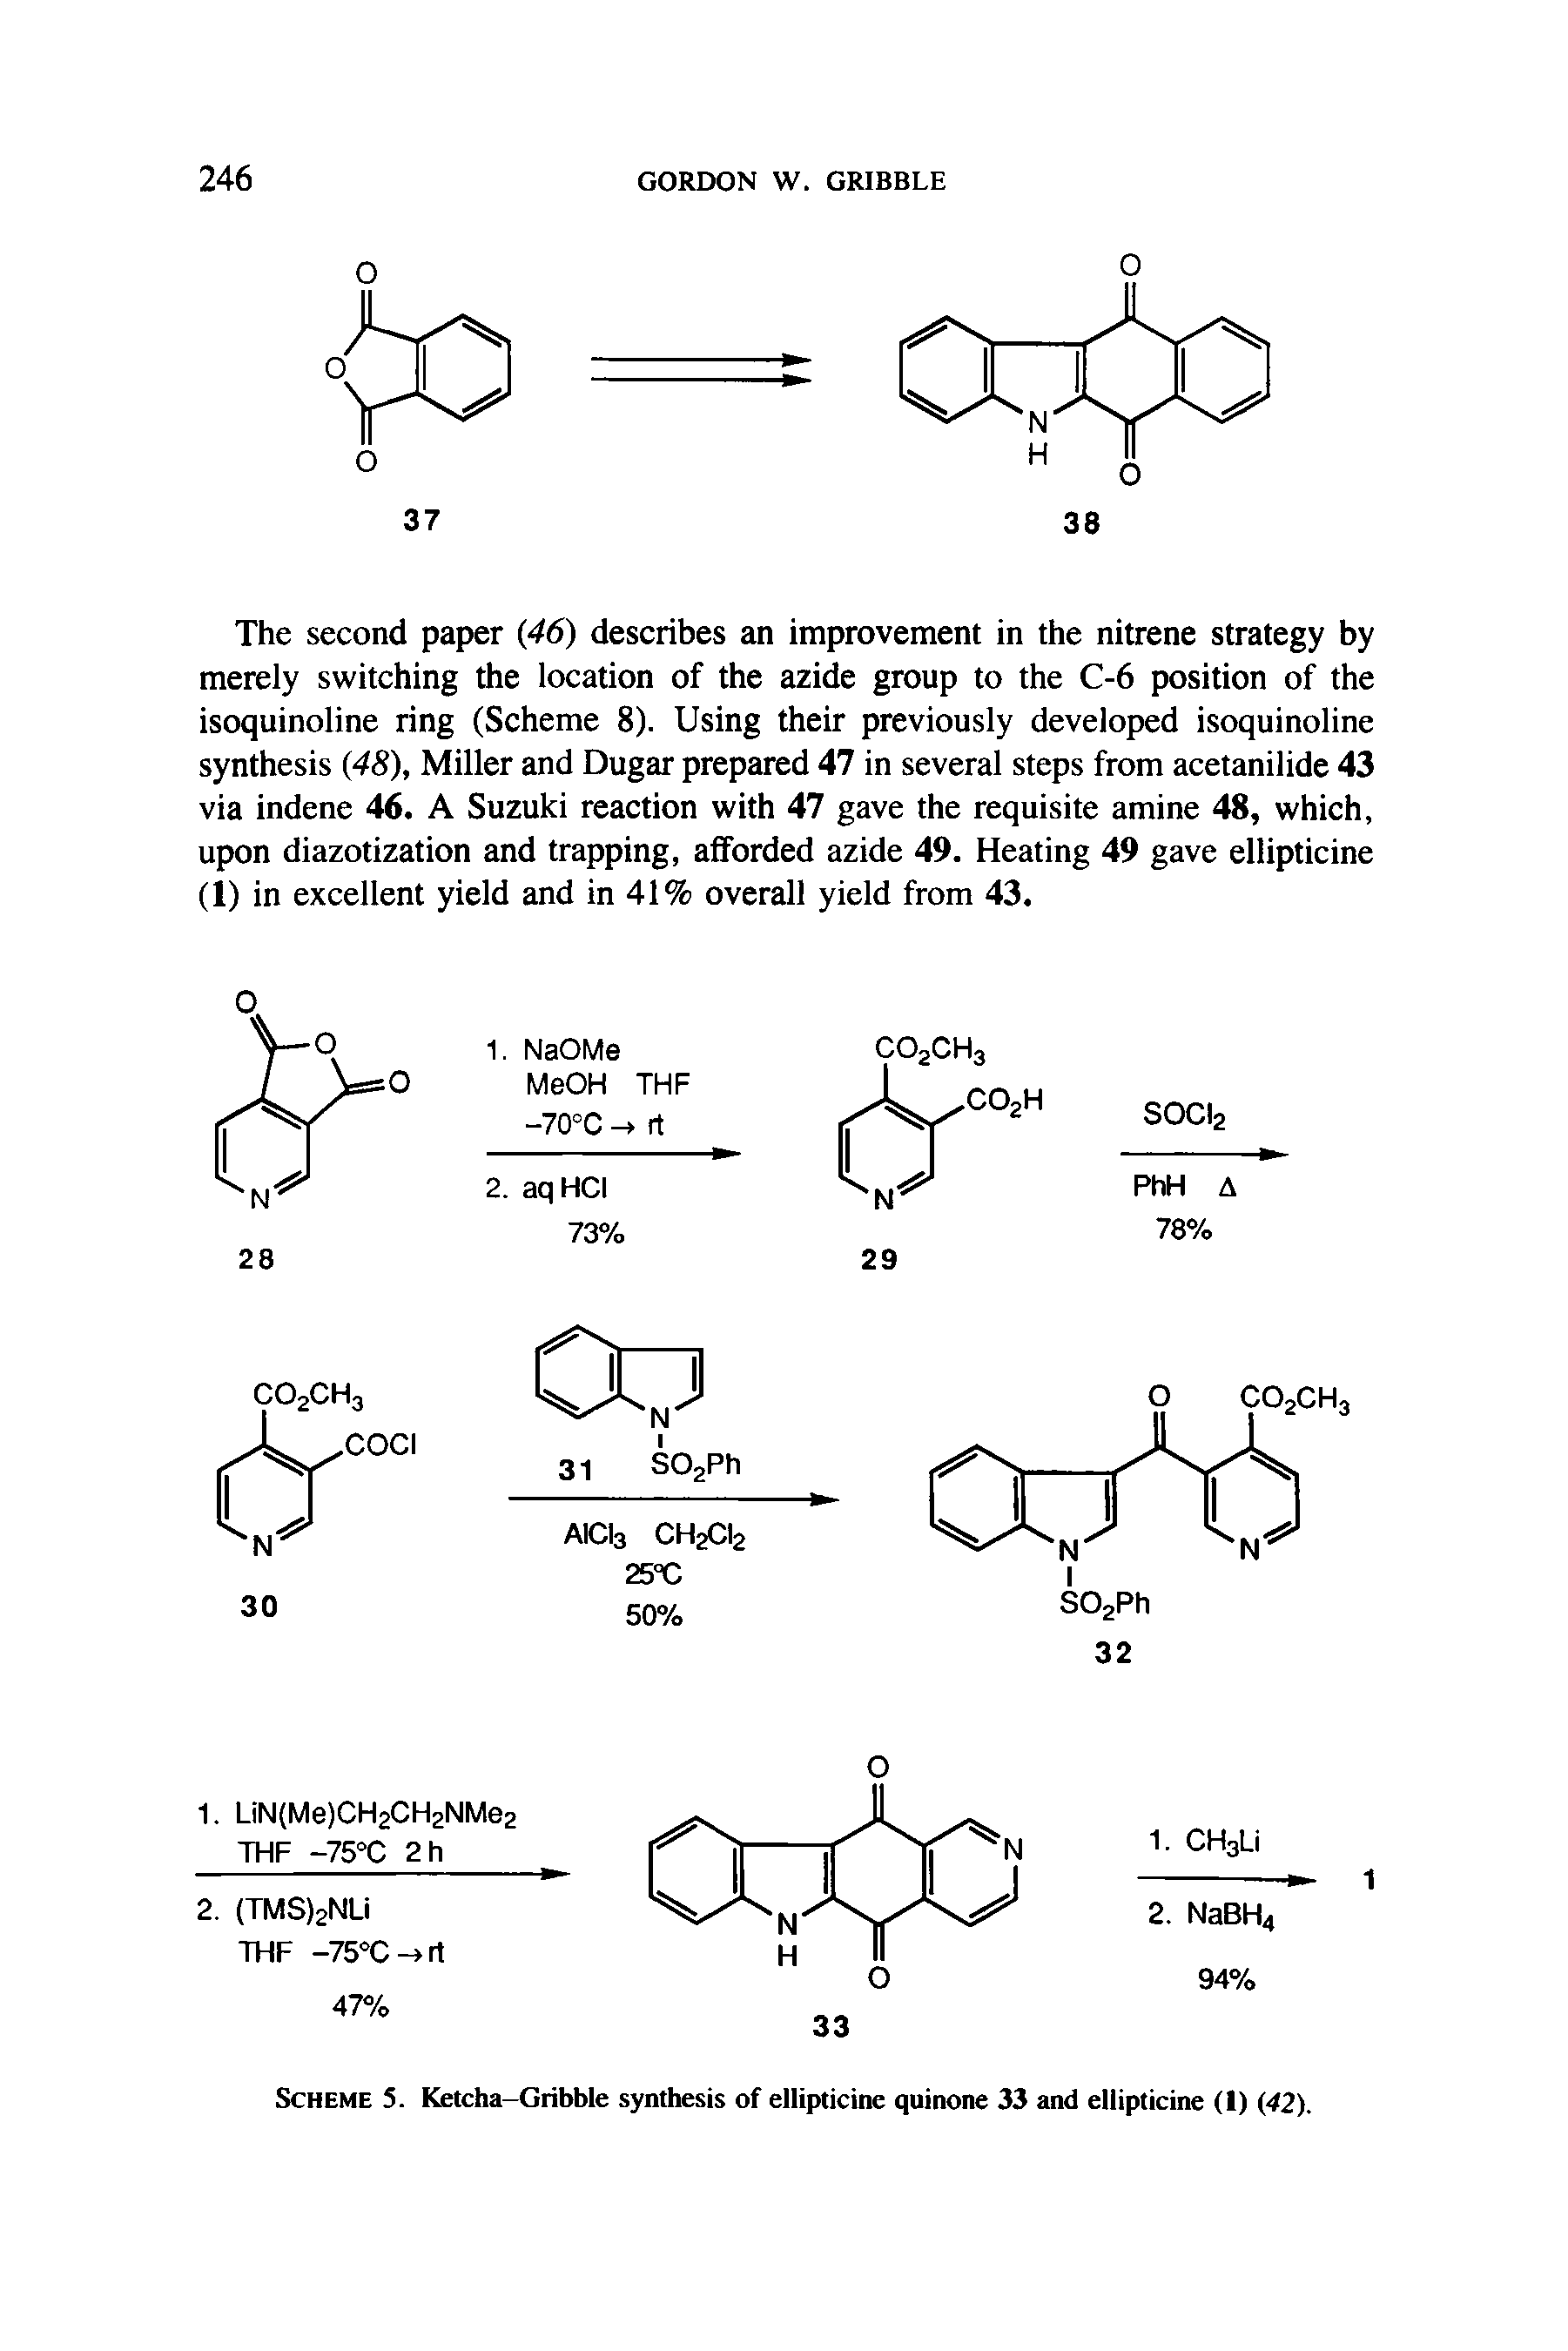 Scheme 5. Ketcha-Gribble synthesis of ellipticine quinone 33 and ellipticine (I) (42).